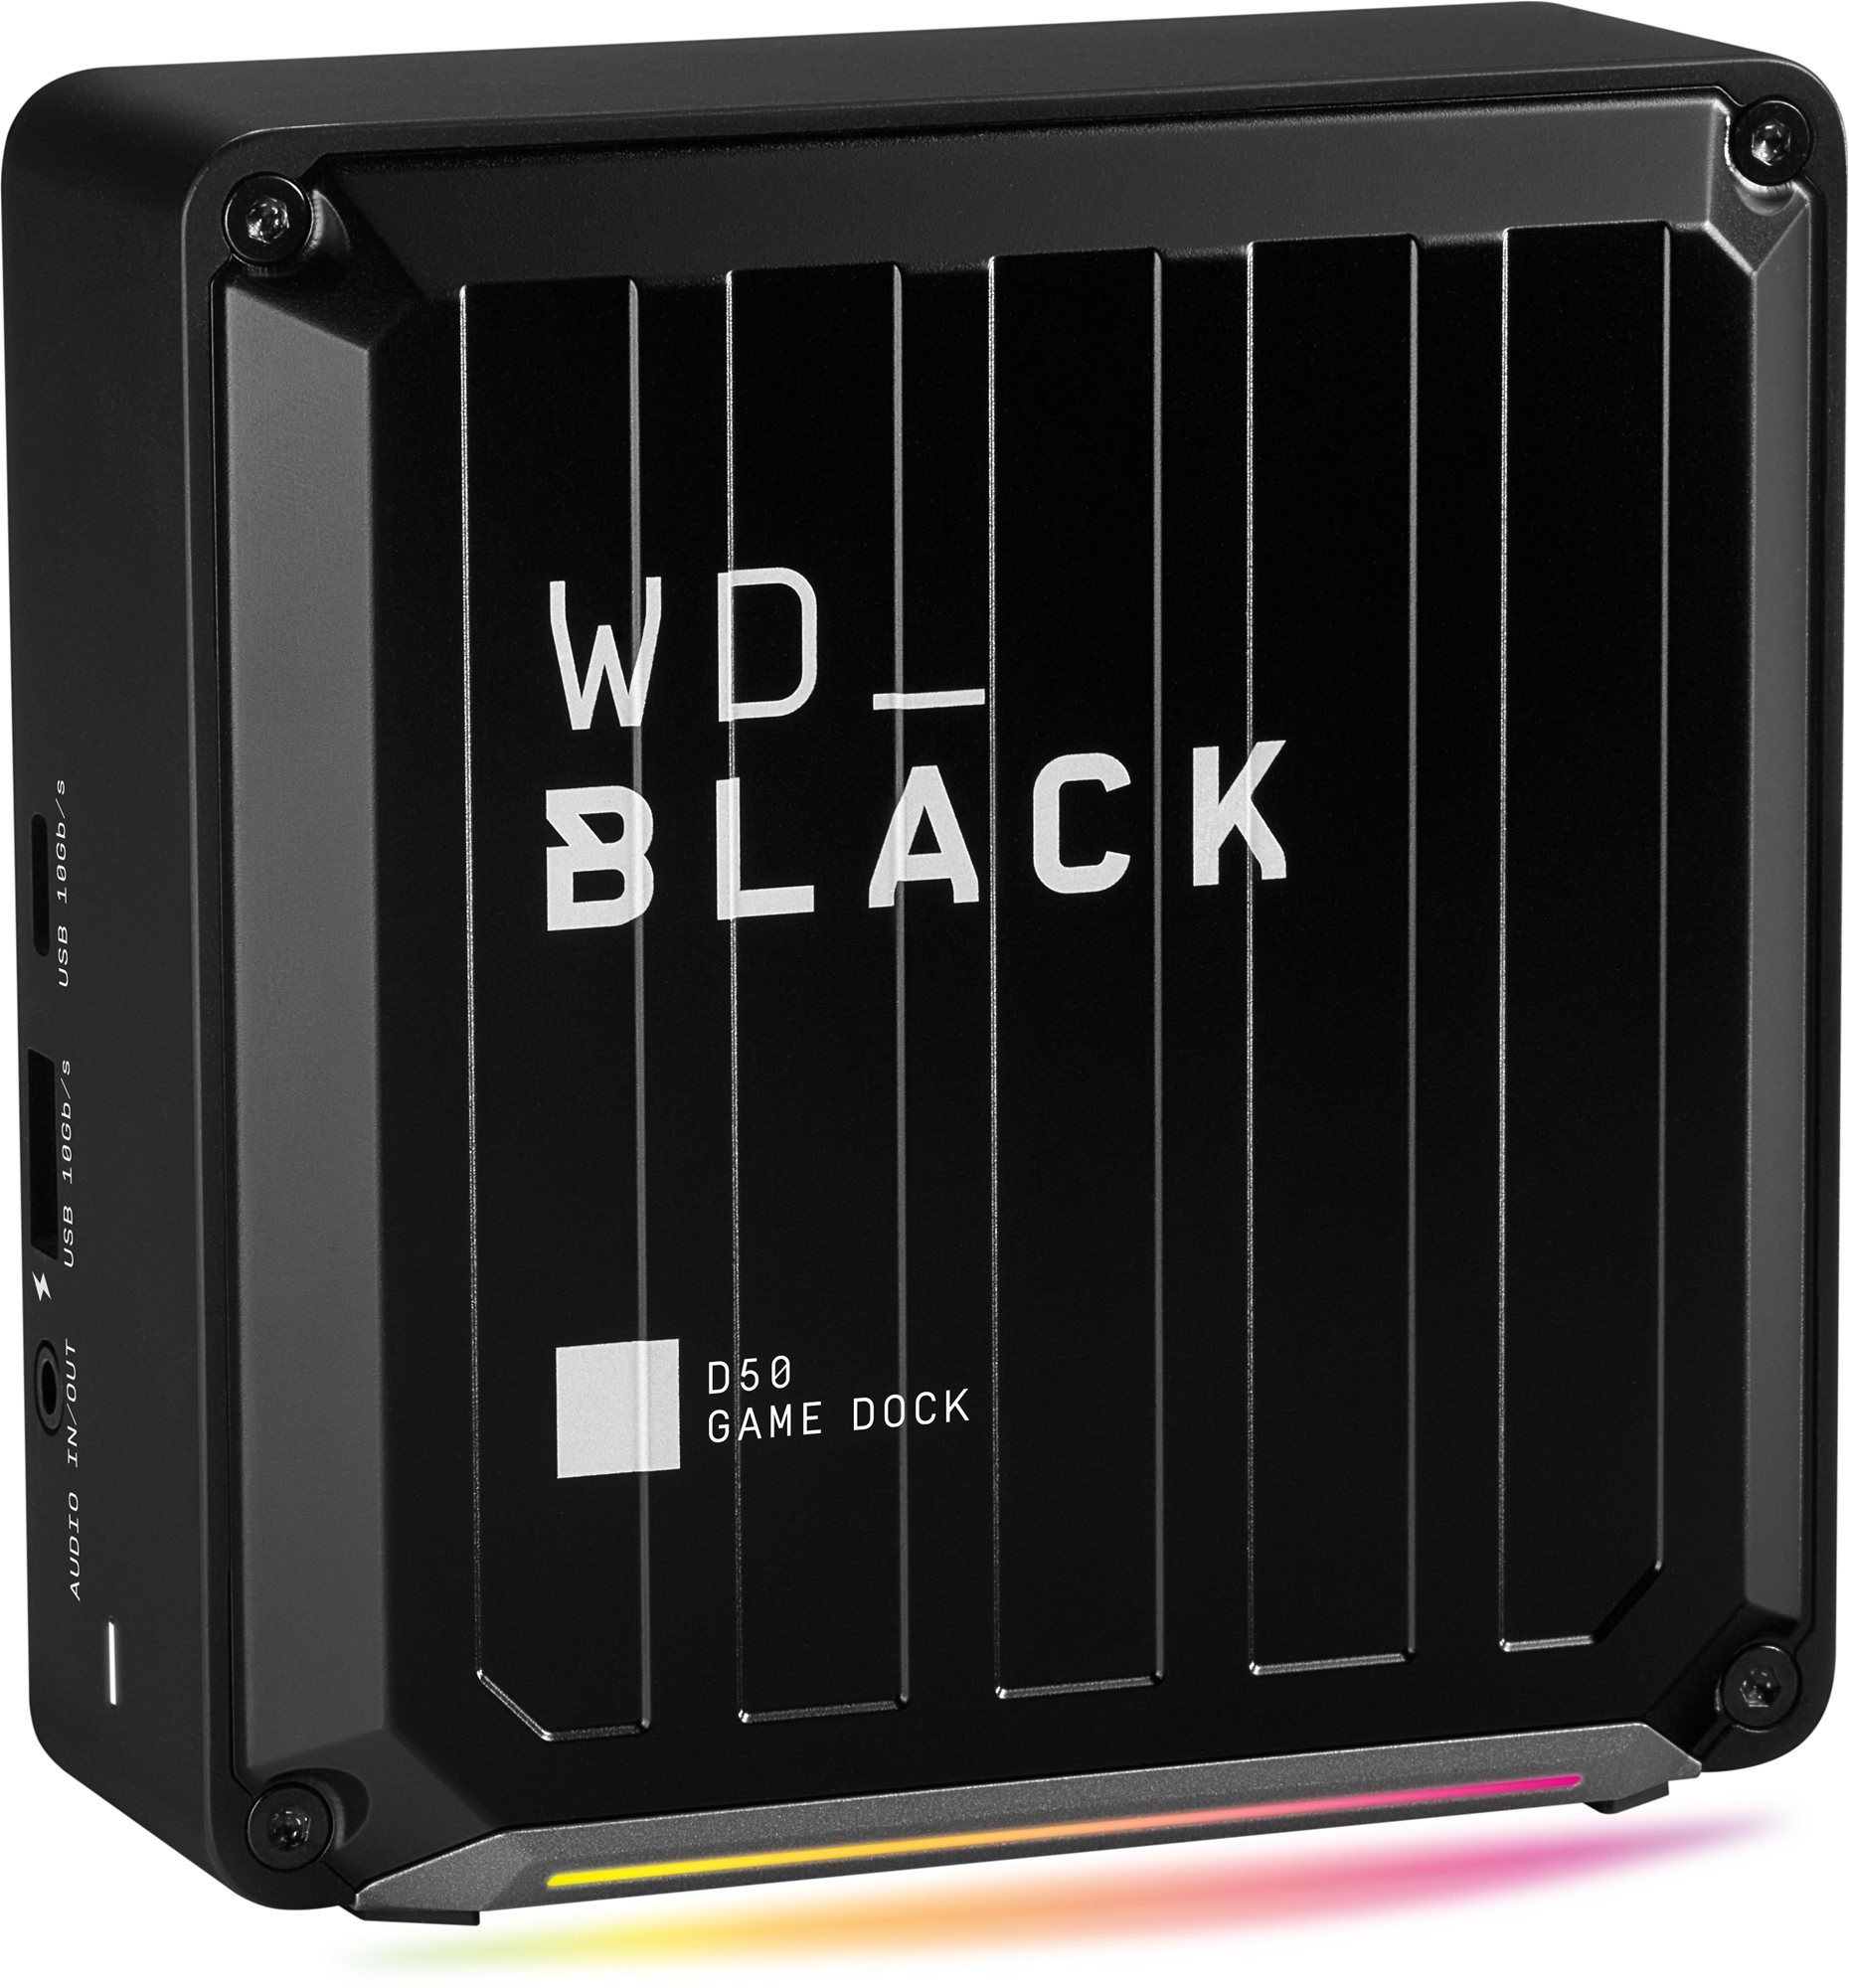 Western digital wd black d50 game dock 1tb